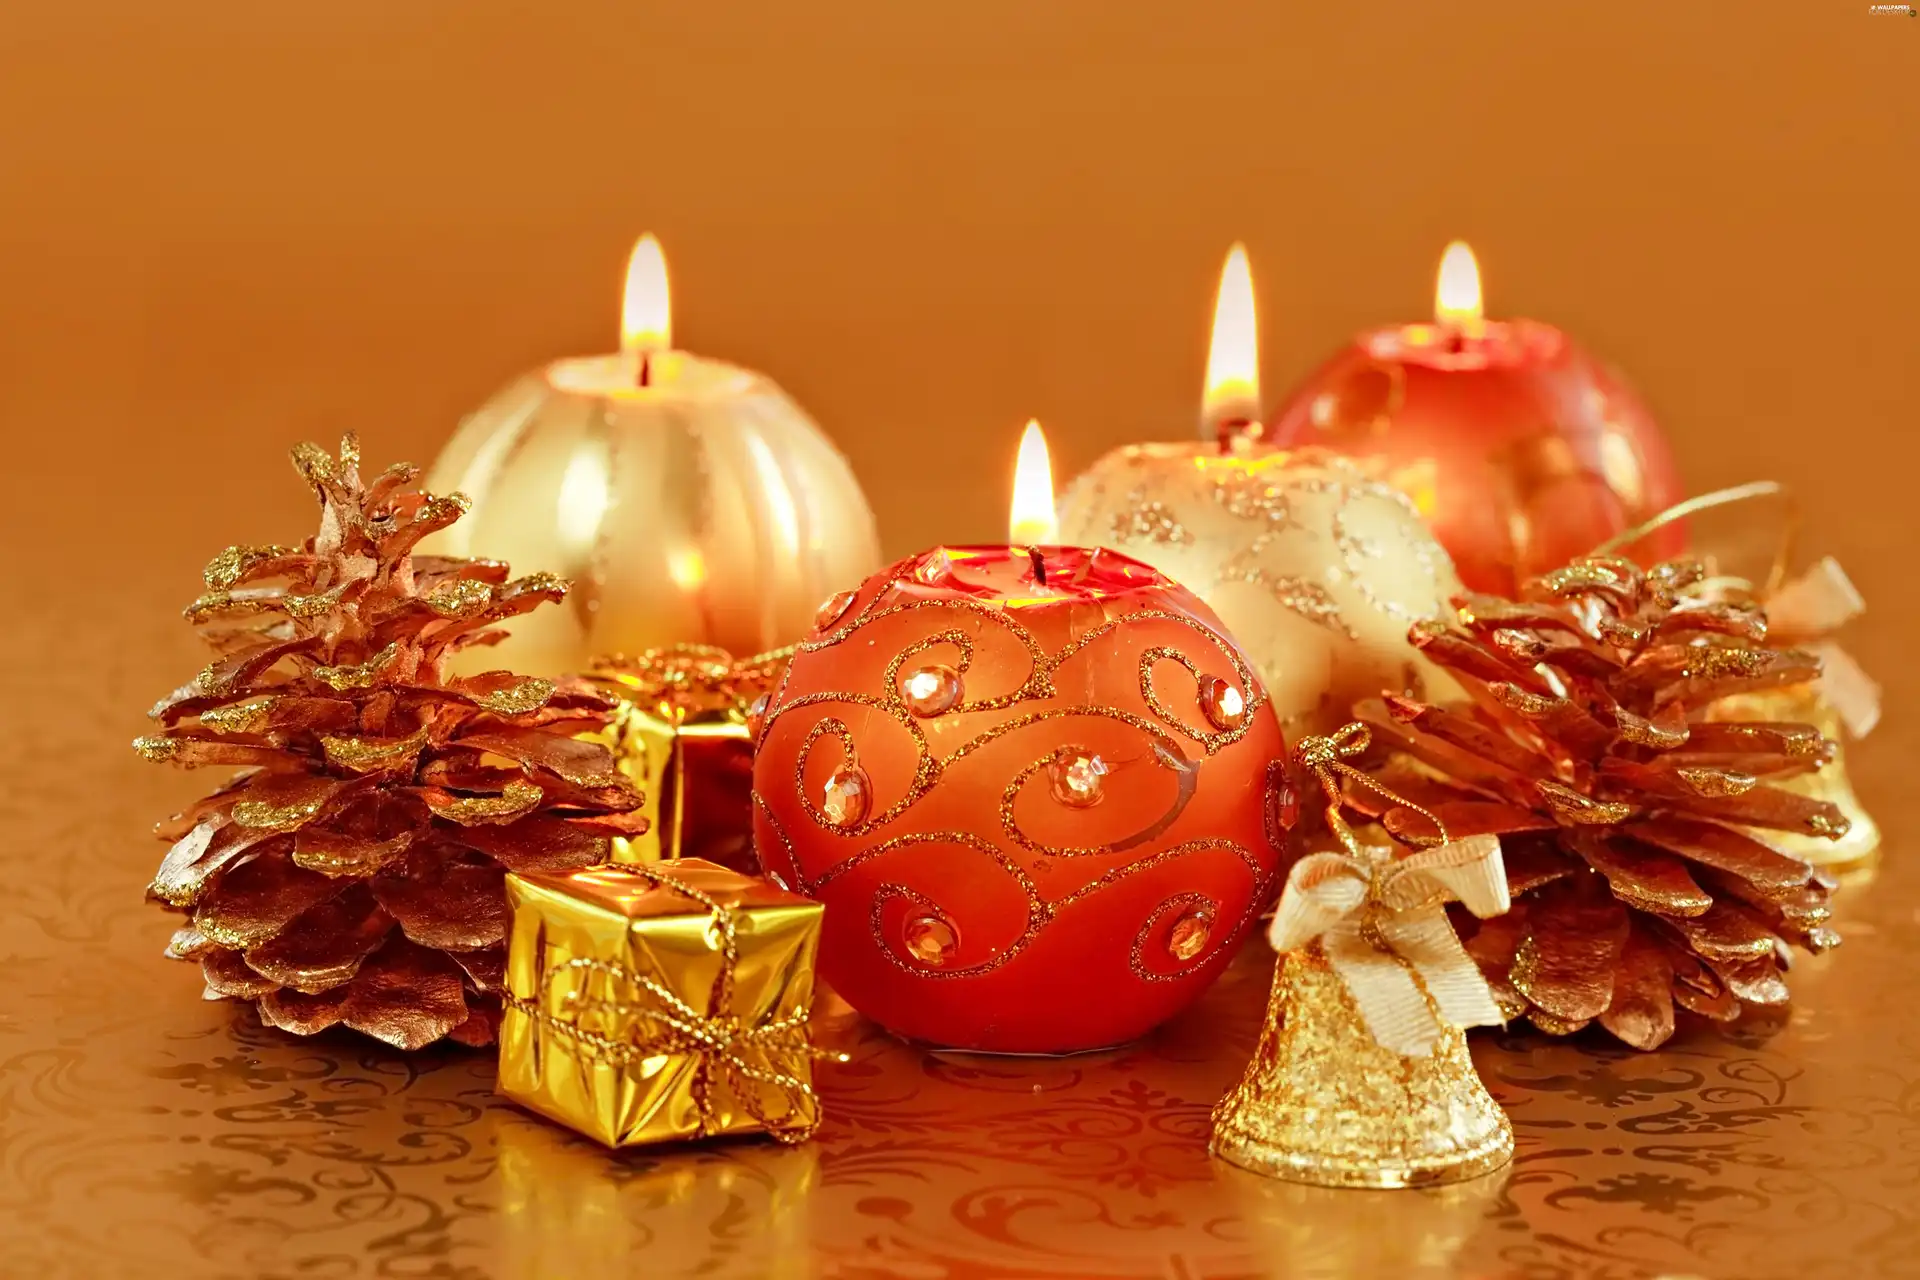 Candles, decoration, Gold, cones, ornamentation, Christmas